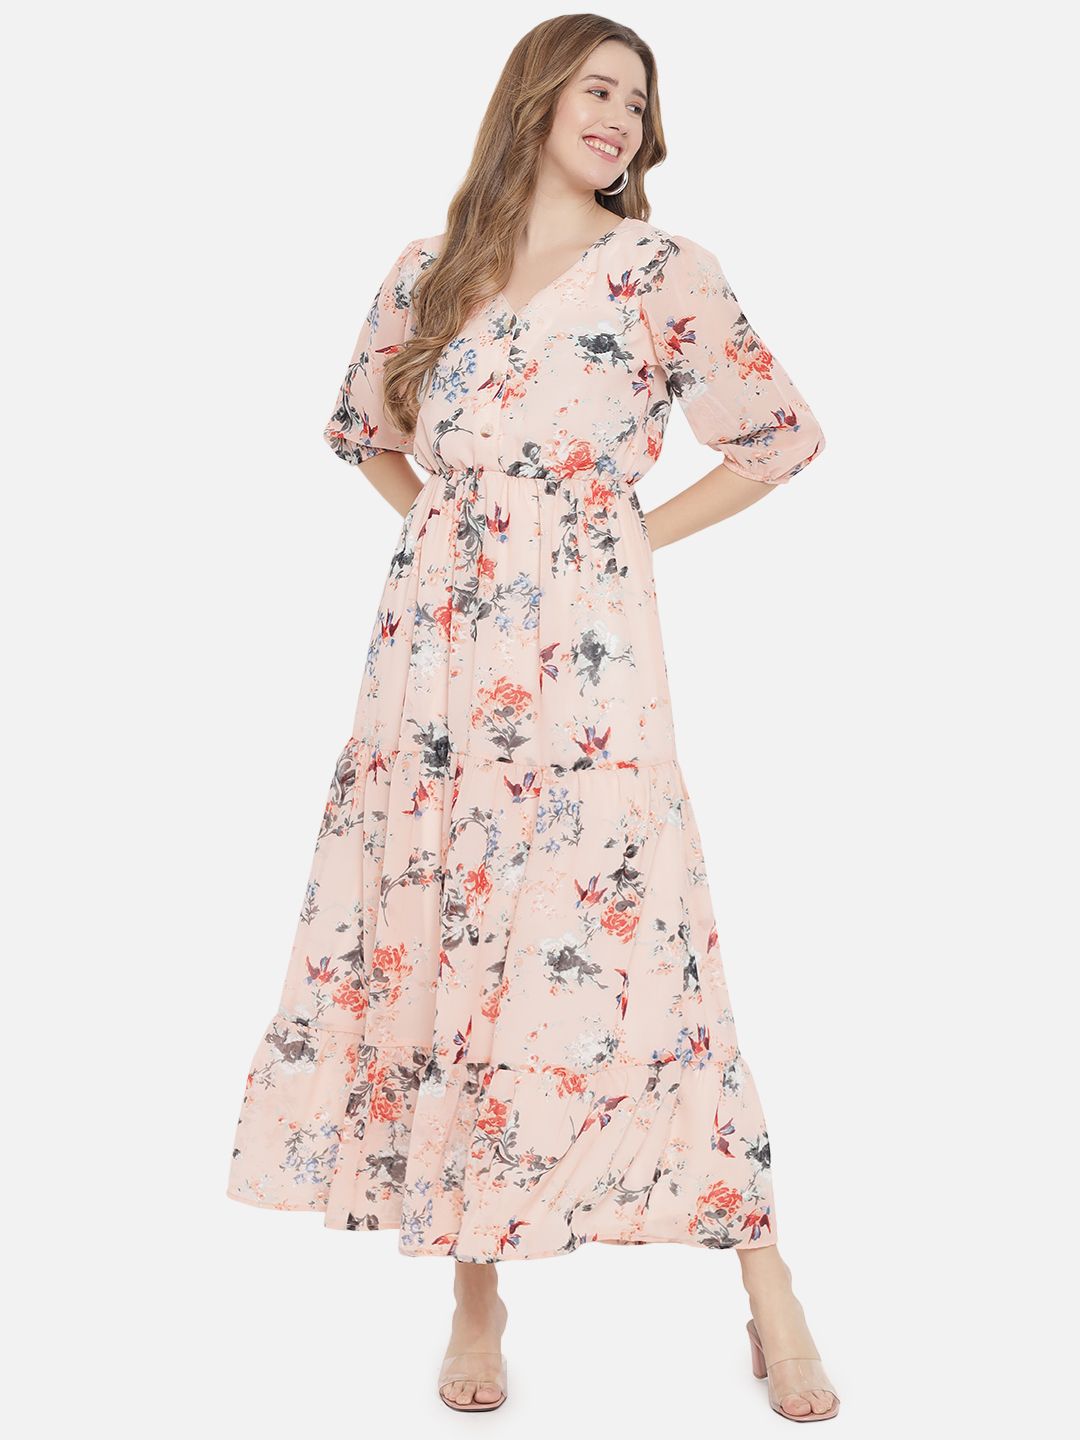 The Vanca Peach-Coloured Floral Maxi Dress Price in India